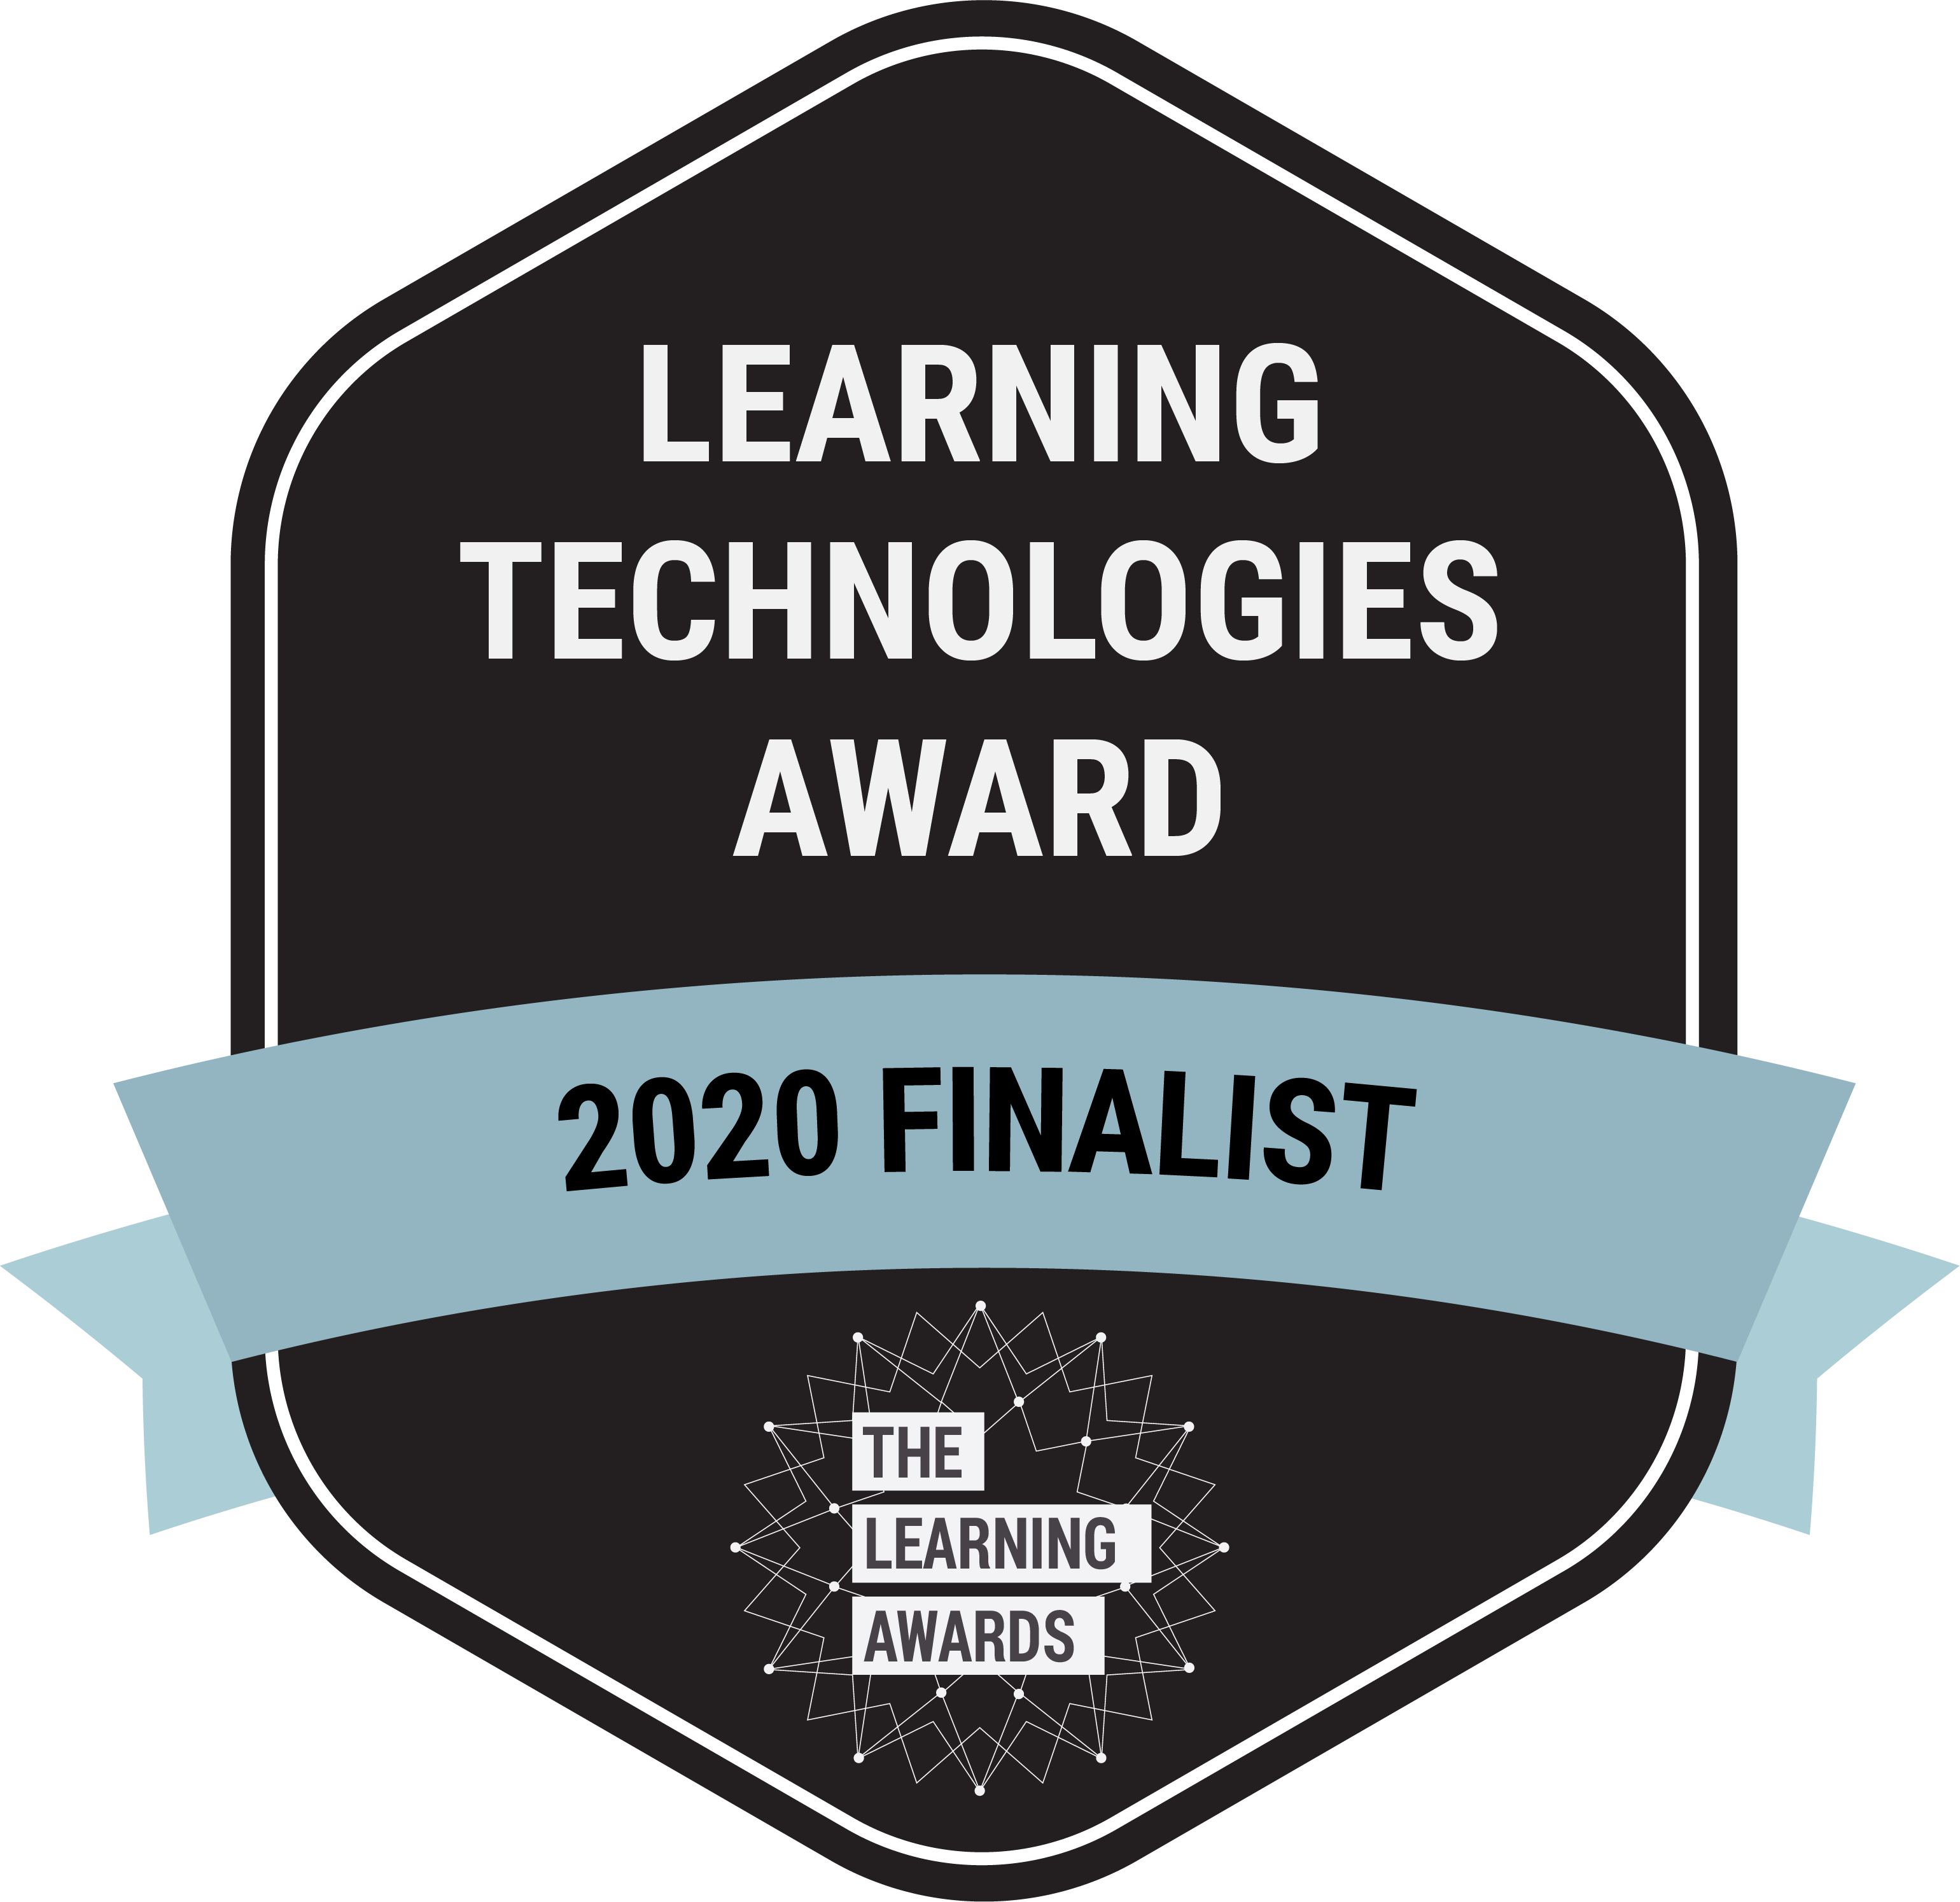 LPI Learning Technologies Award Finalist 2020